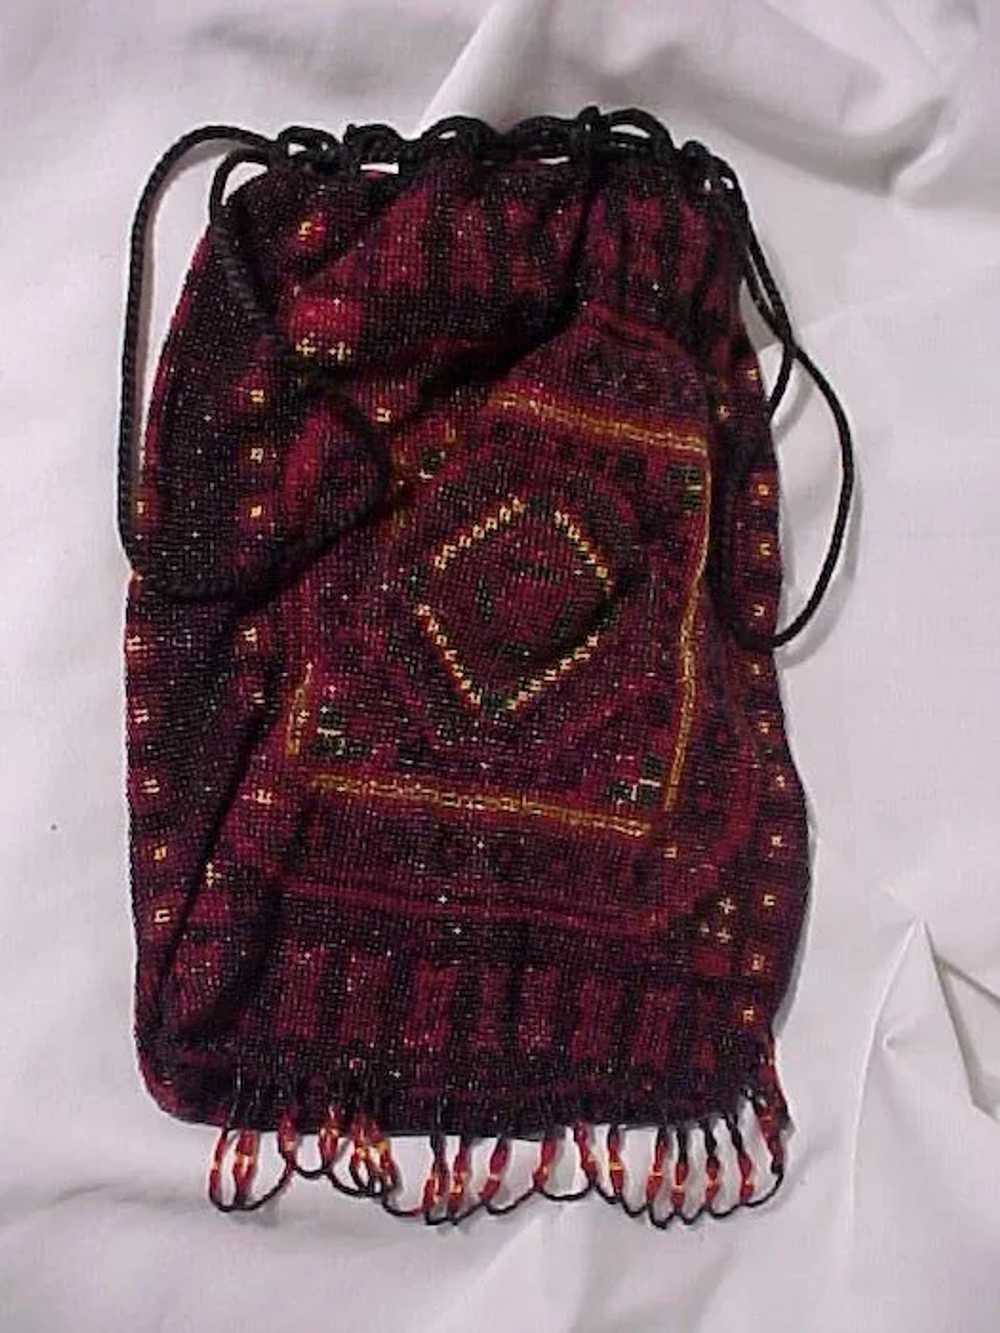 Beaded Bag with Indian Motif - image 4